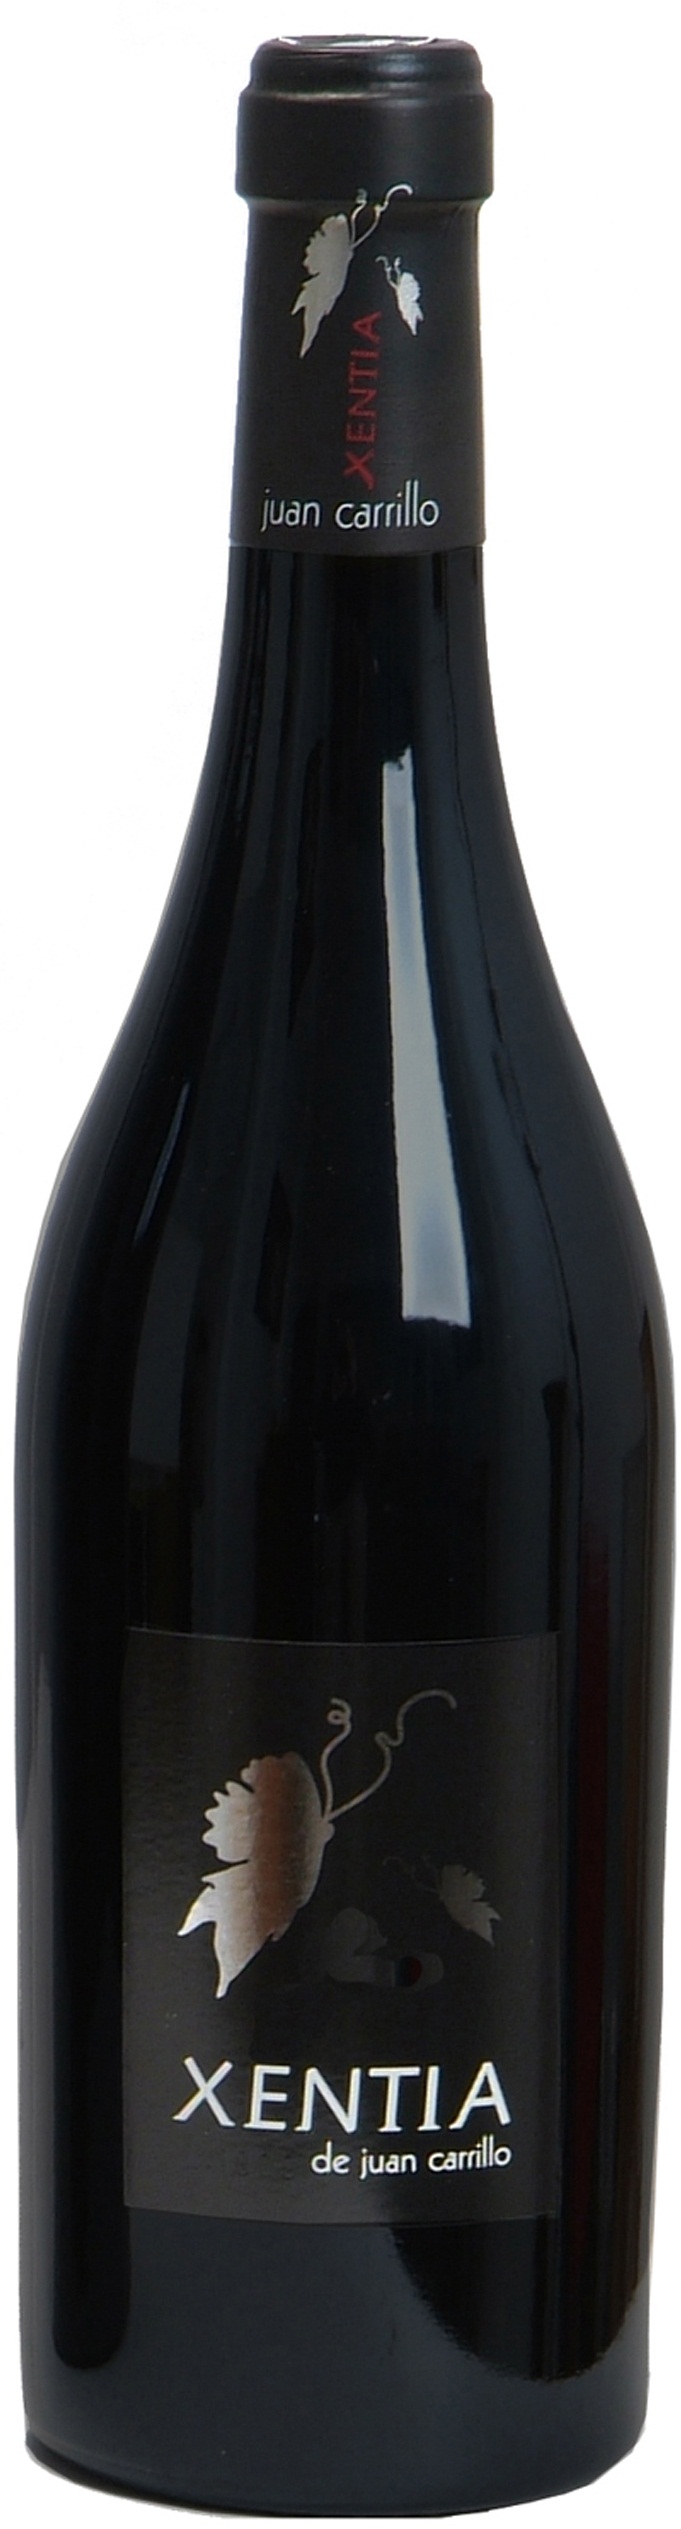 Image of Wine bottle Xentia de Juan Carrillo